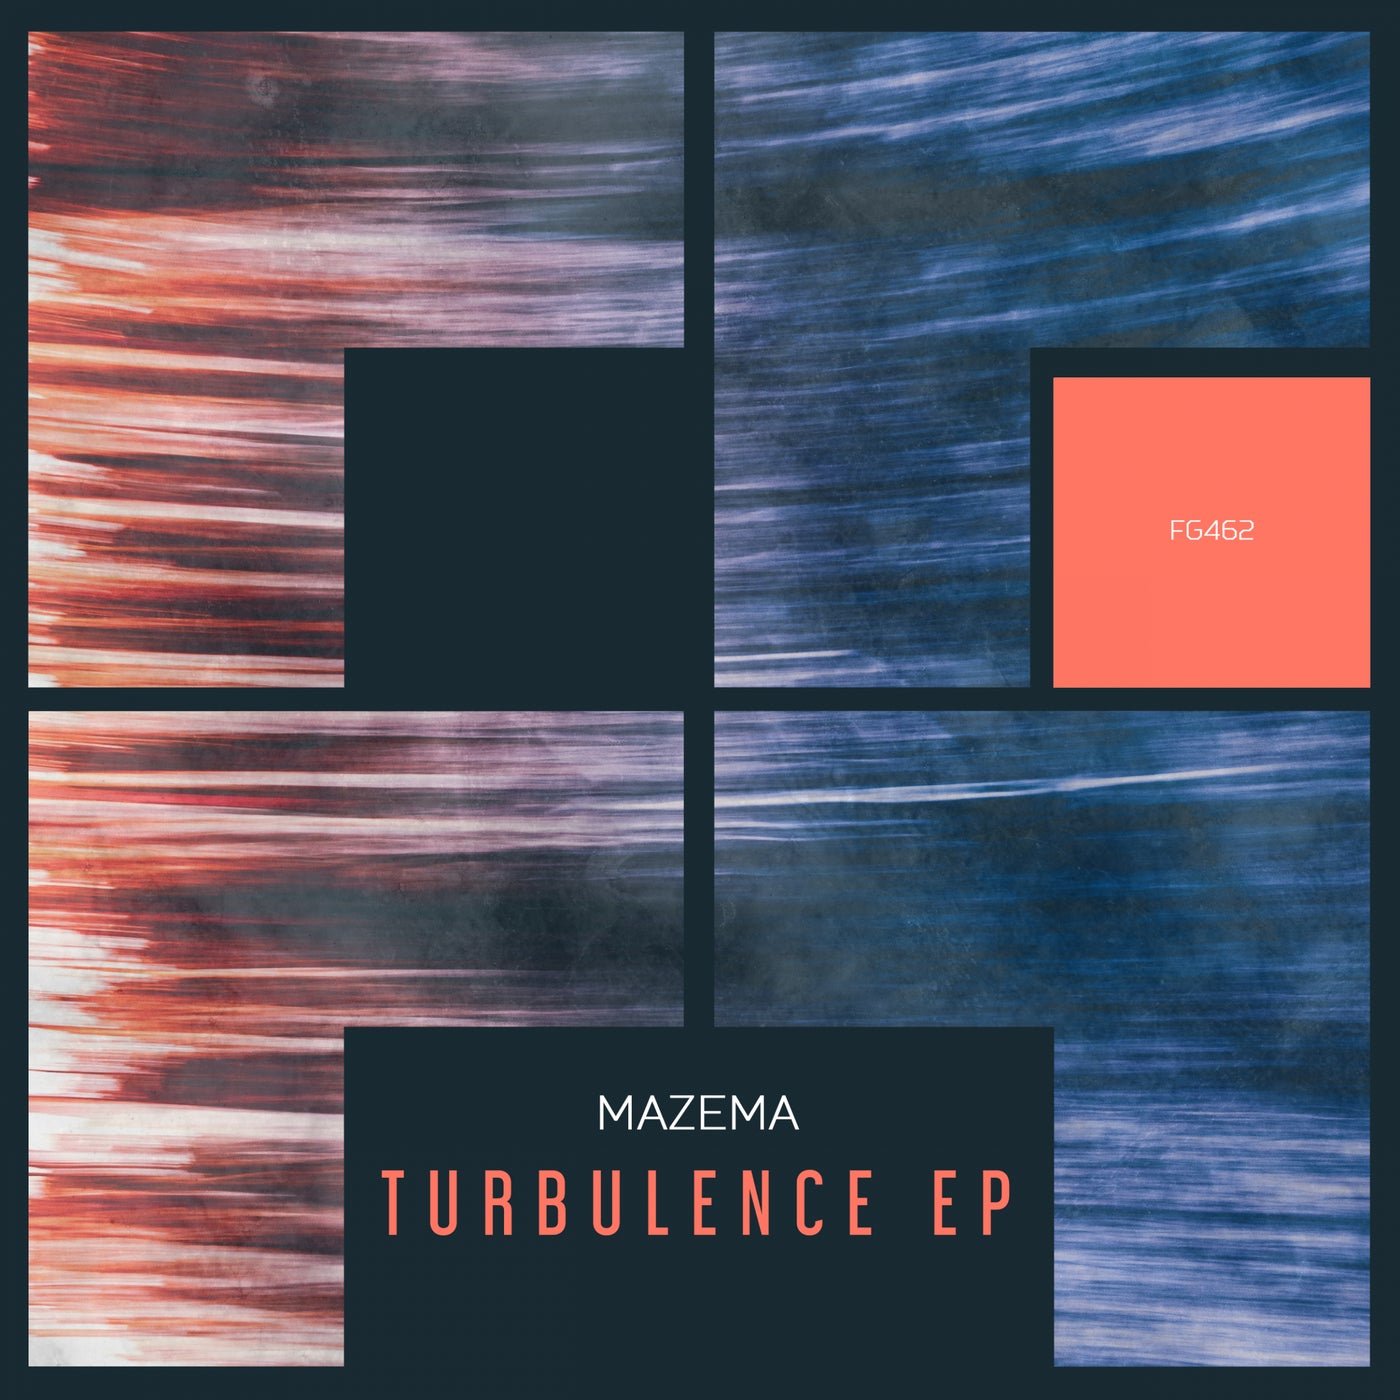 Mazema – Turbulence EP [FG462]